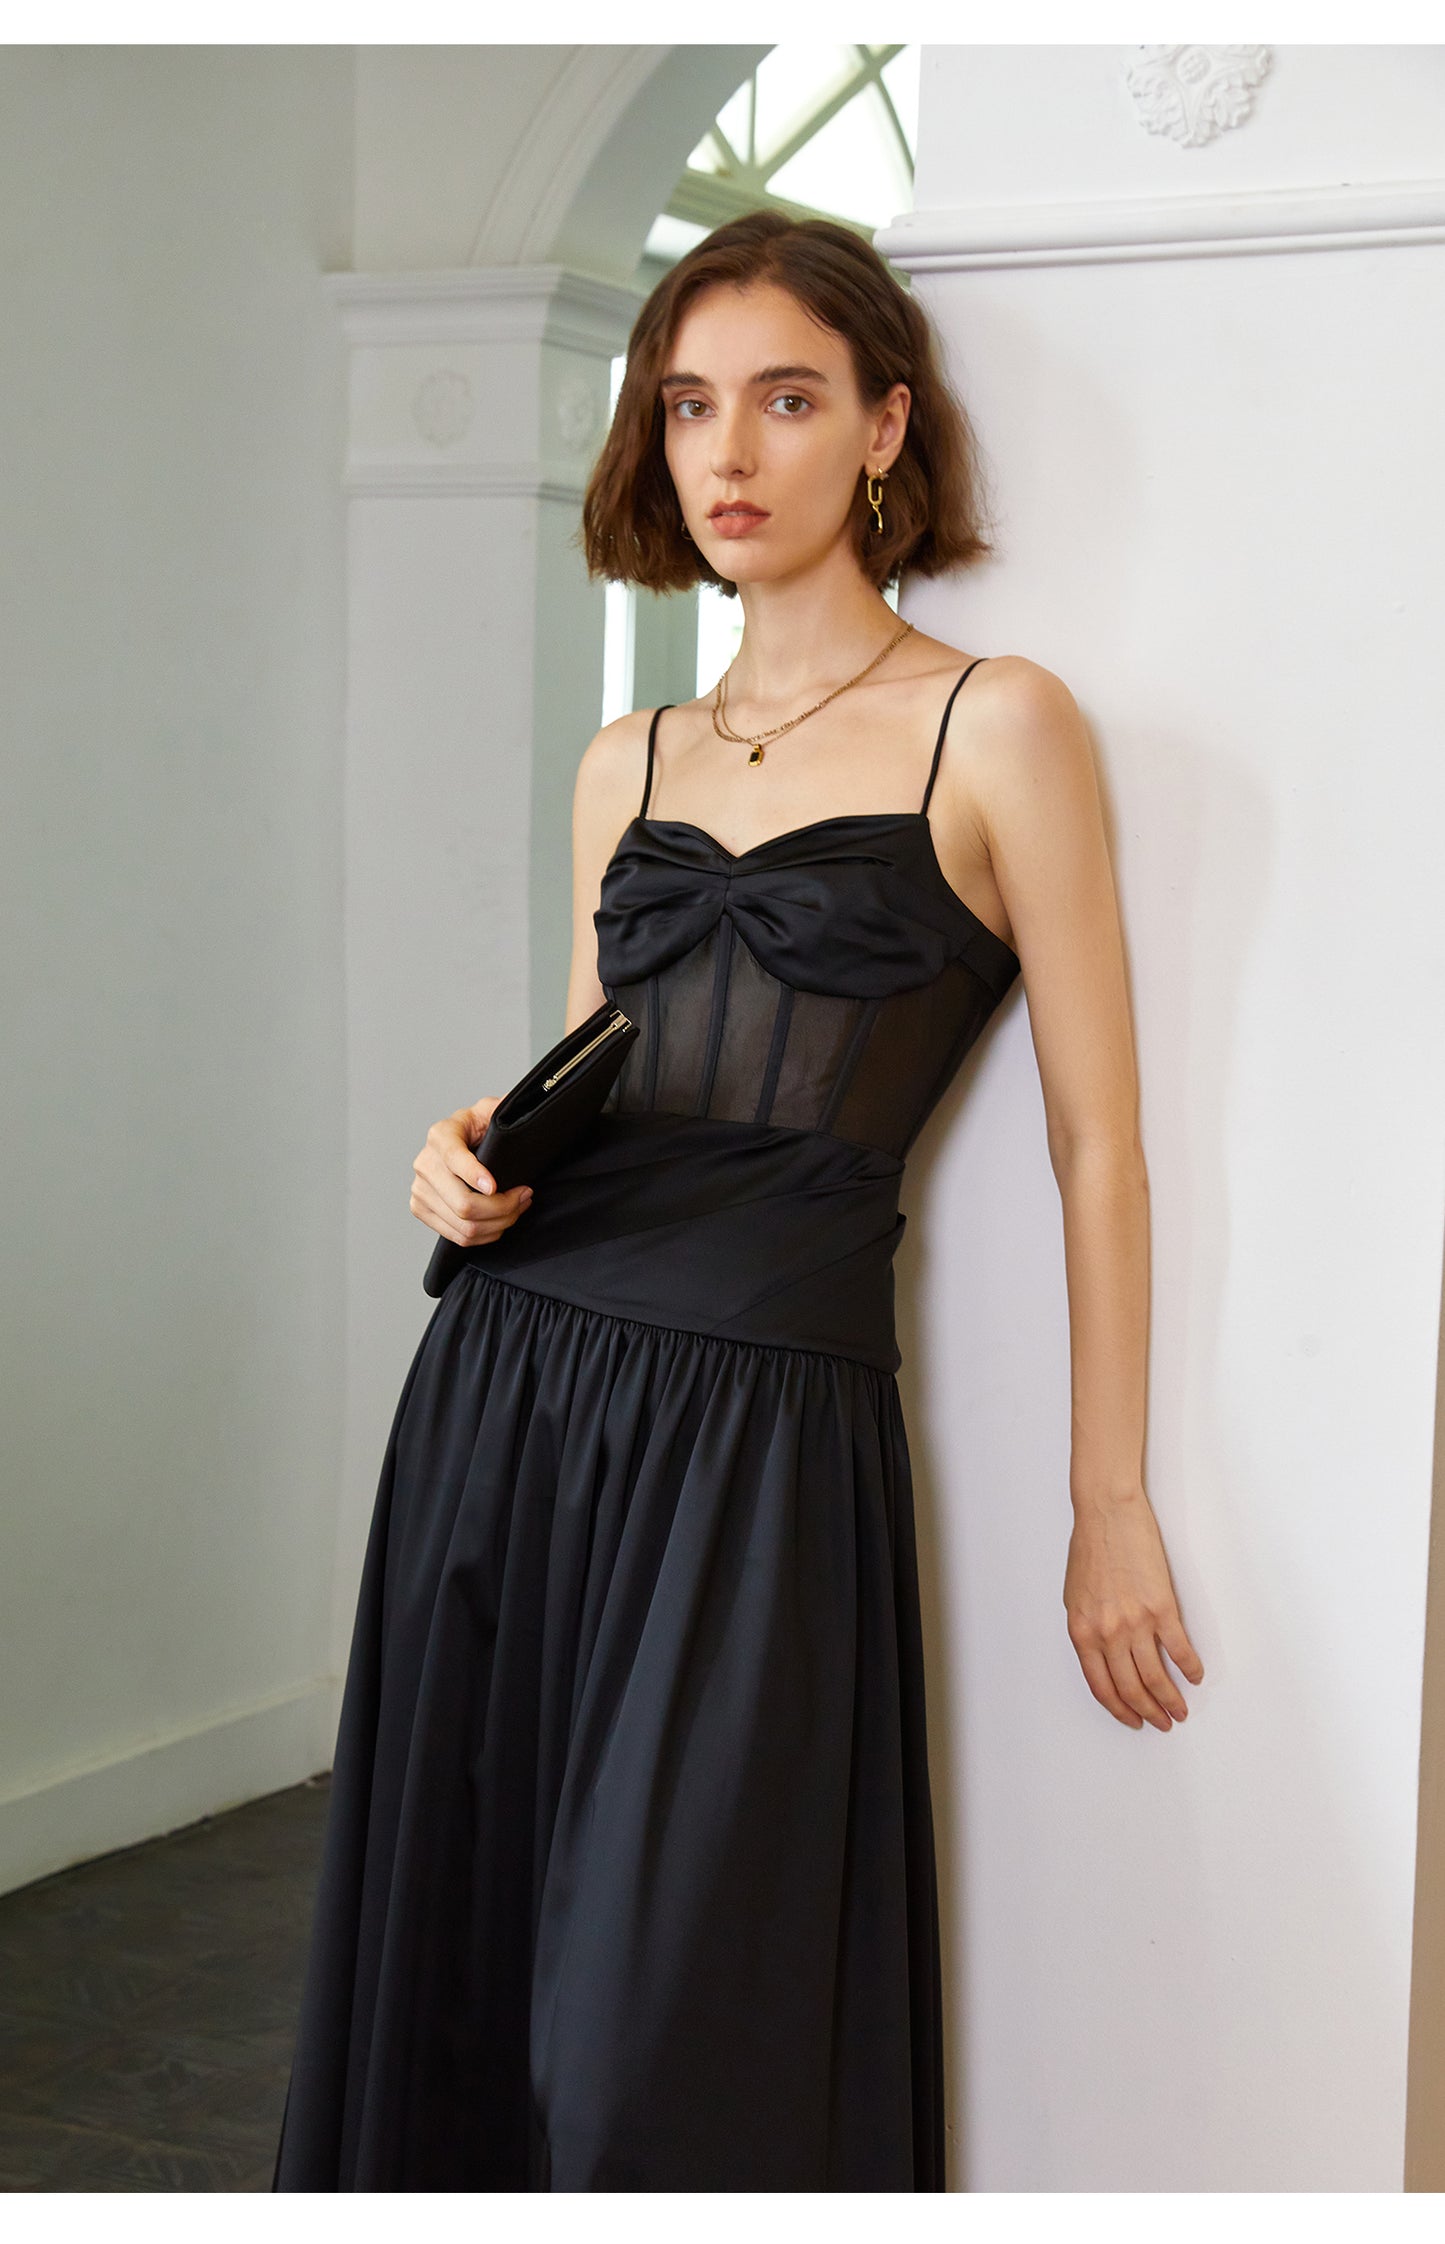 Fishbone tube top dress features a high waistline and long skirt silhouette dress= Ola